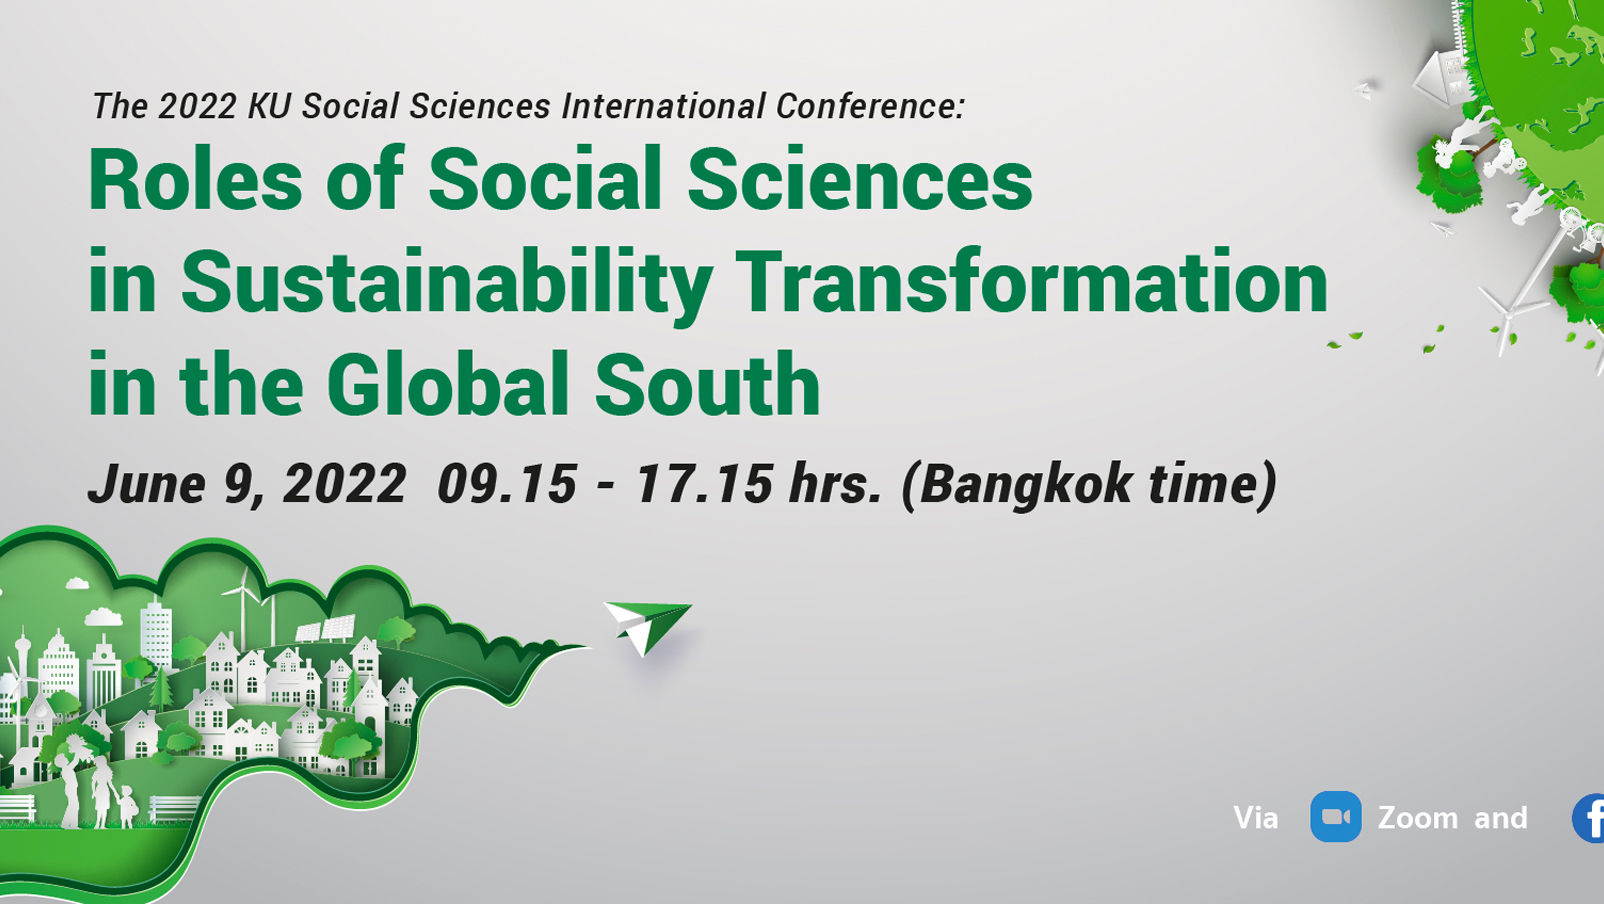 The 2022 KU Social Sciences International Conference